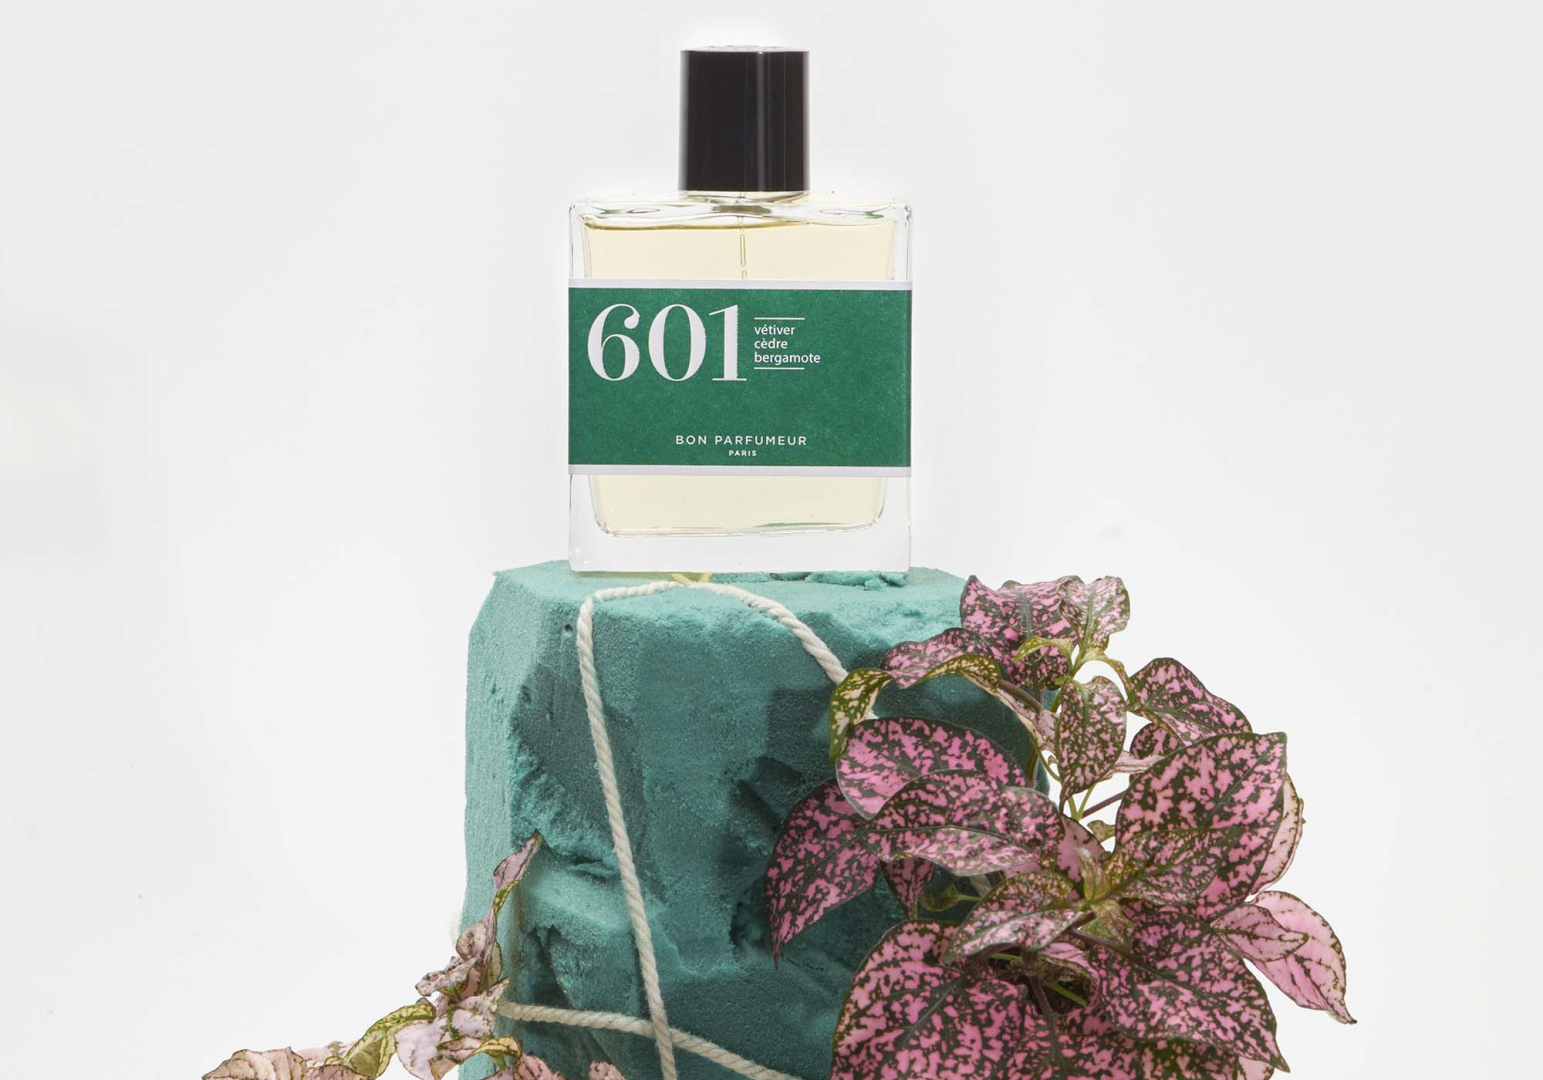 Parfum 601 Vétiver Cèdre Bergamote 30ml - BON PARFUMEUR